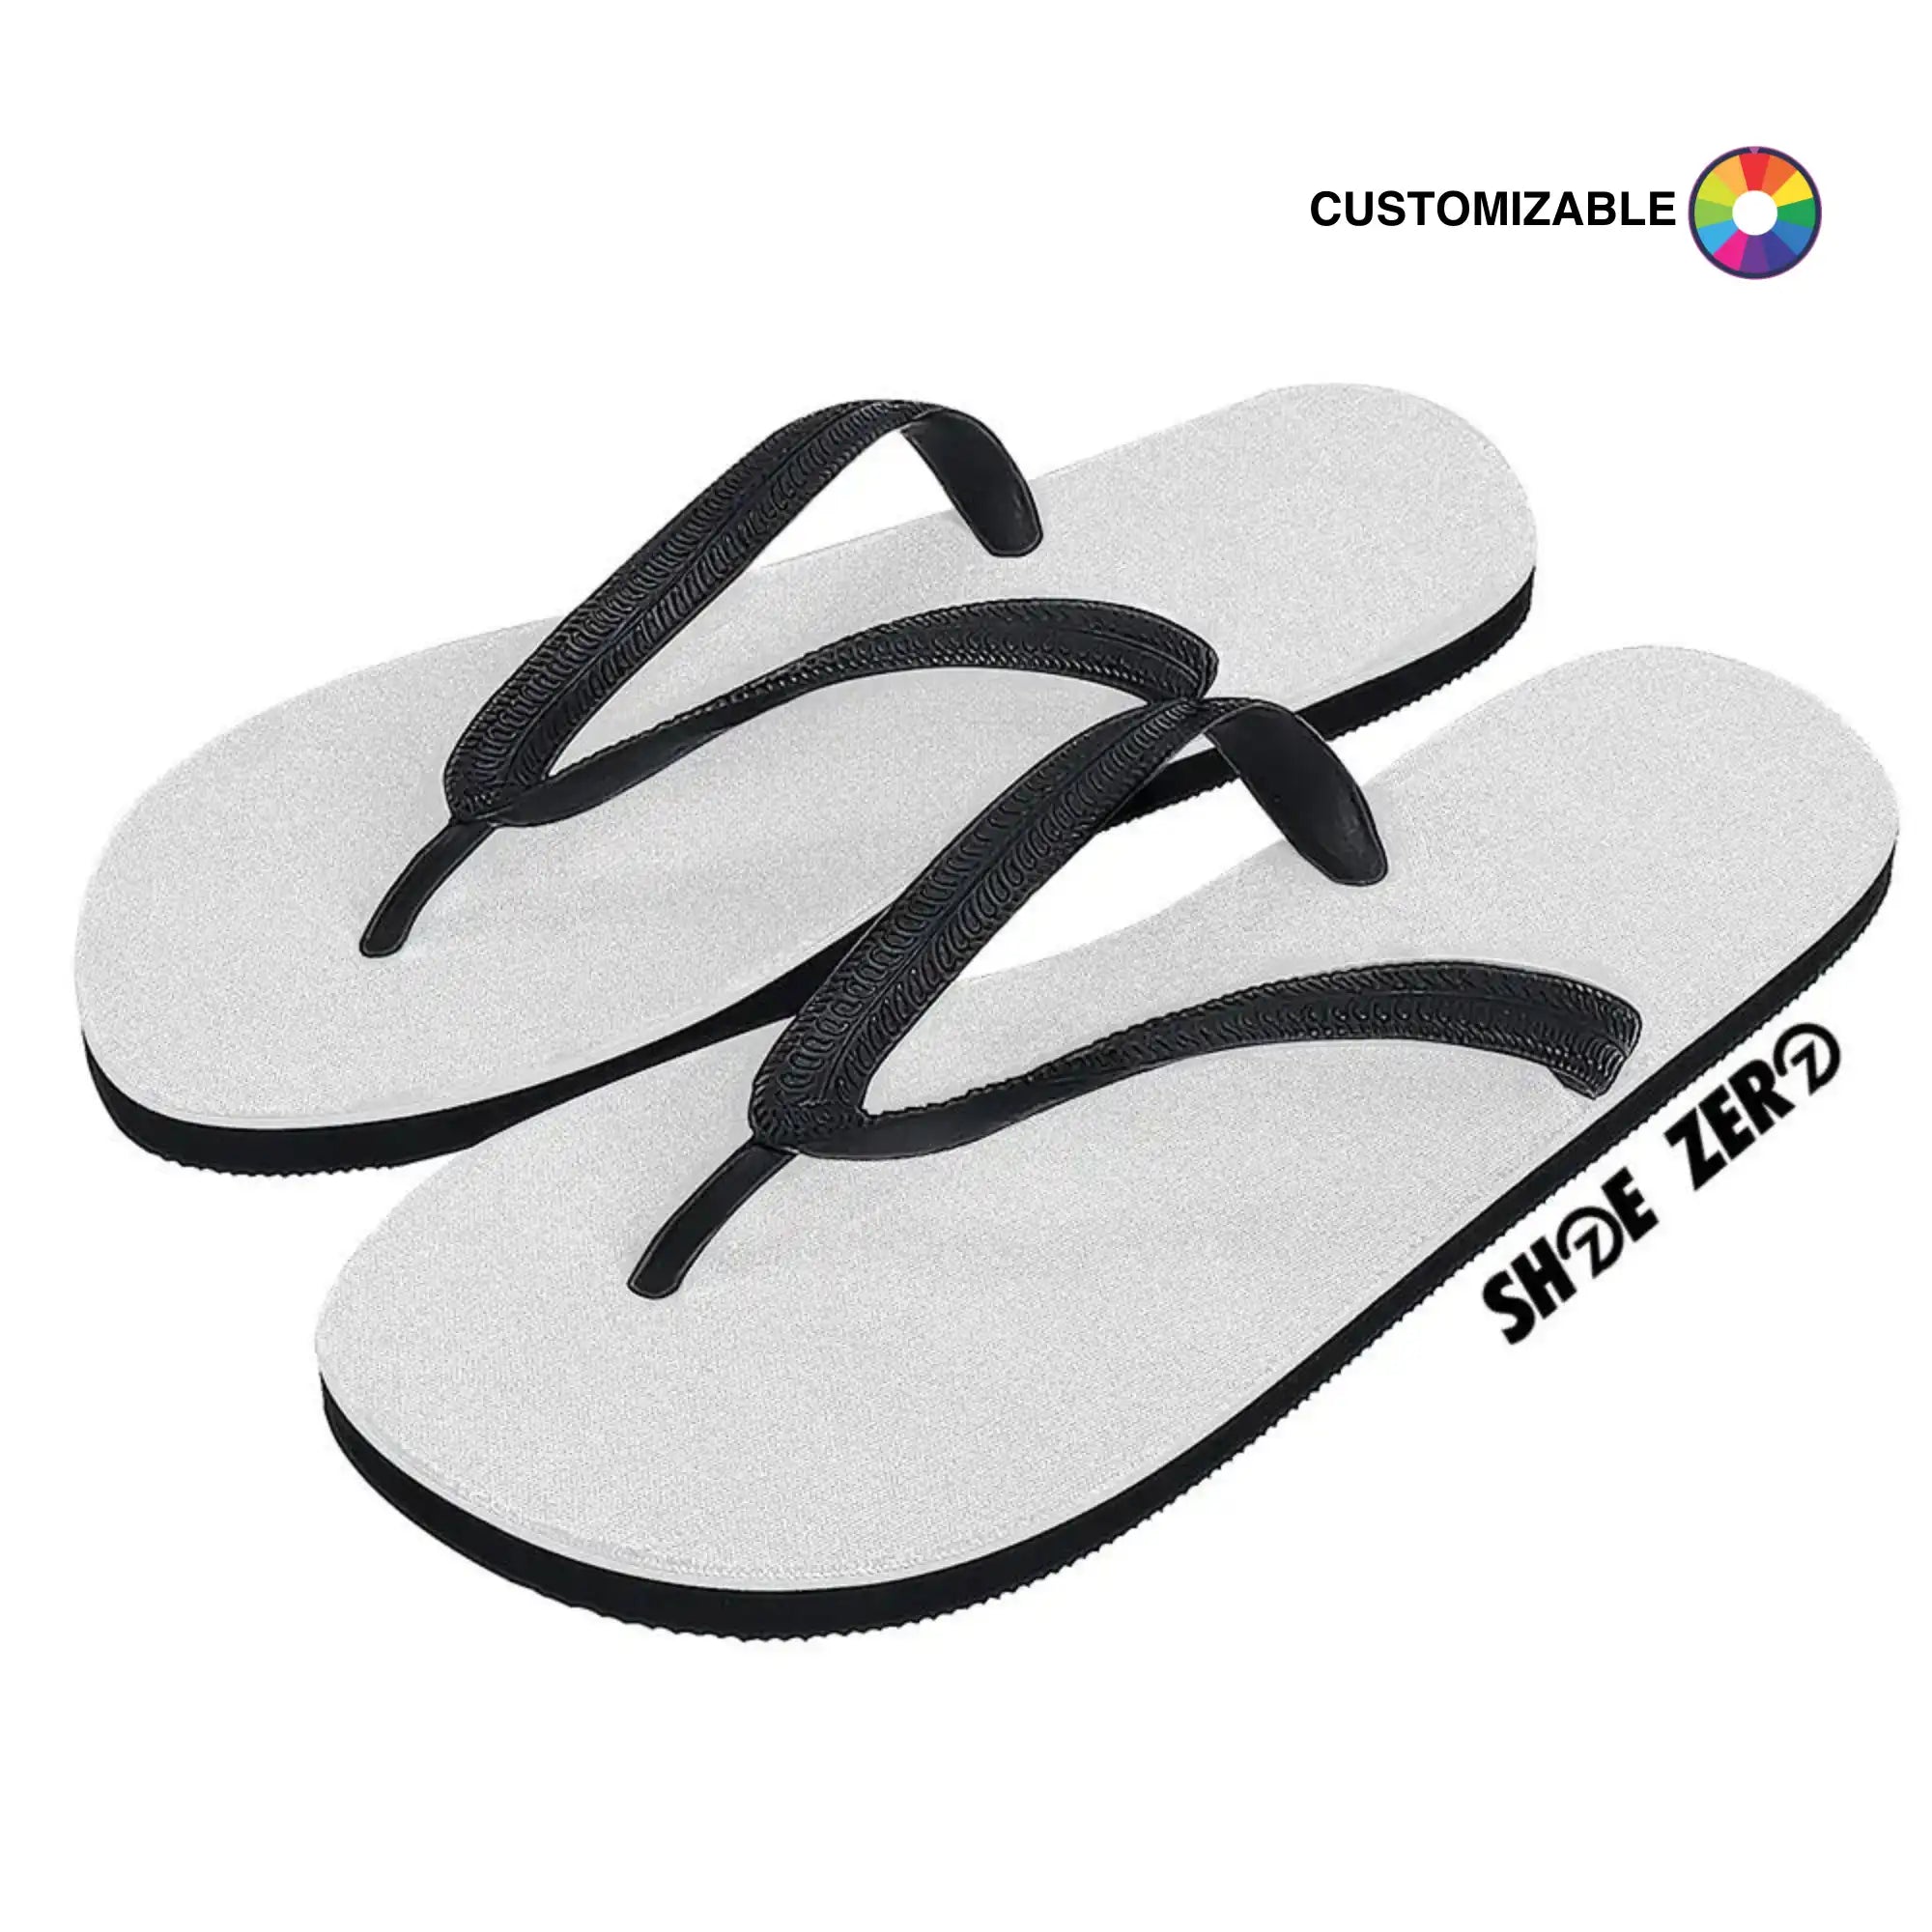 Customizable Flip Flops | Design your own | Shoe Zero